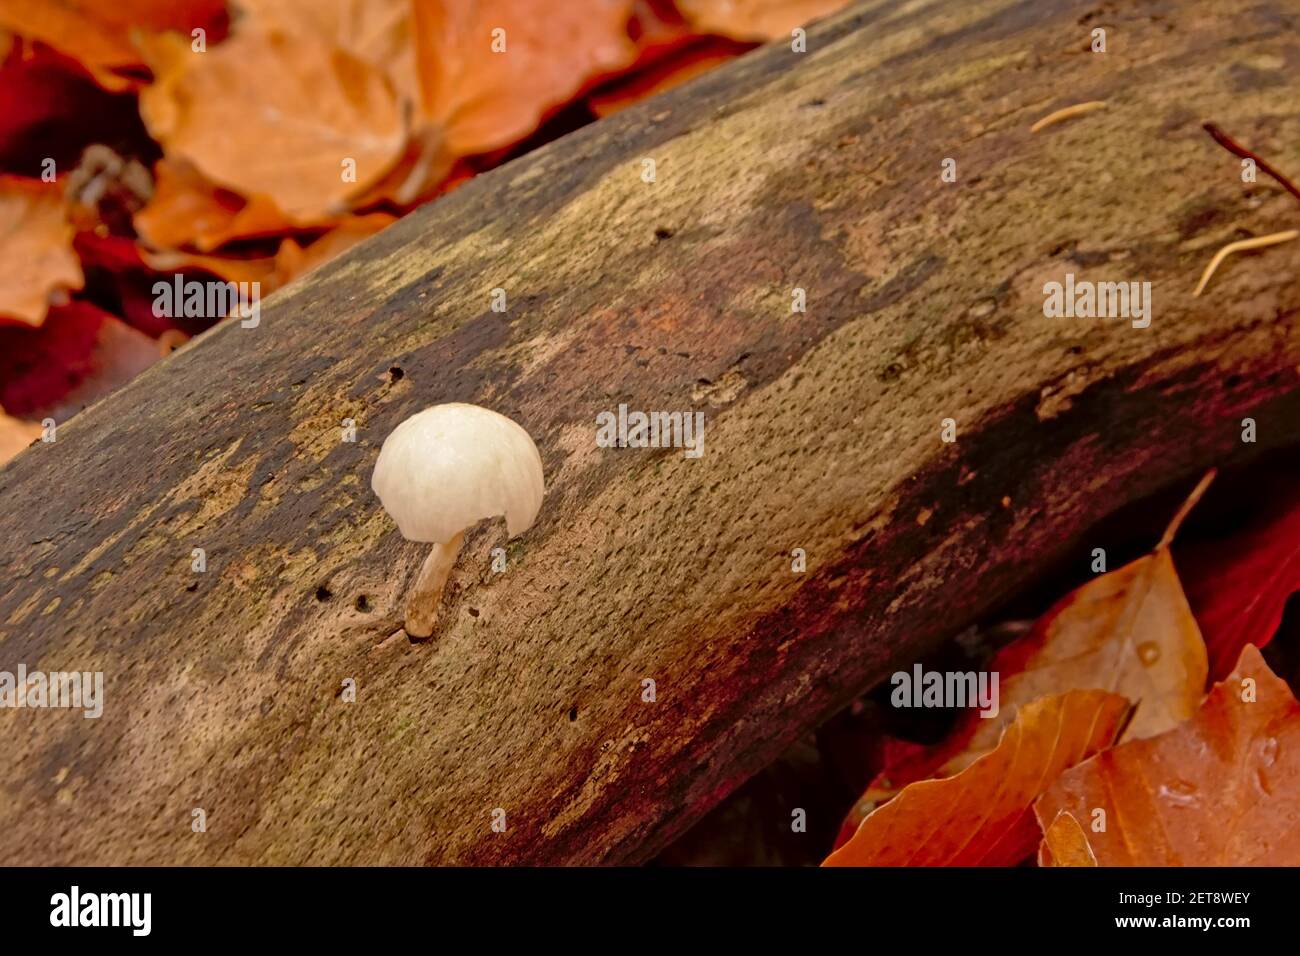 Silky rosegill mushroom growing on a fallen branch Stock Photo